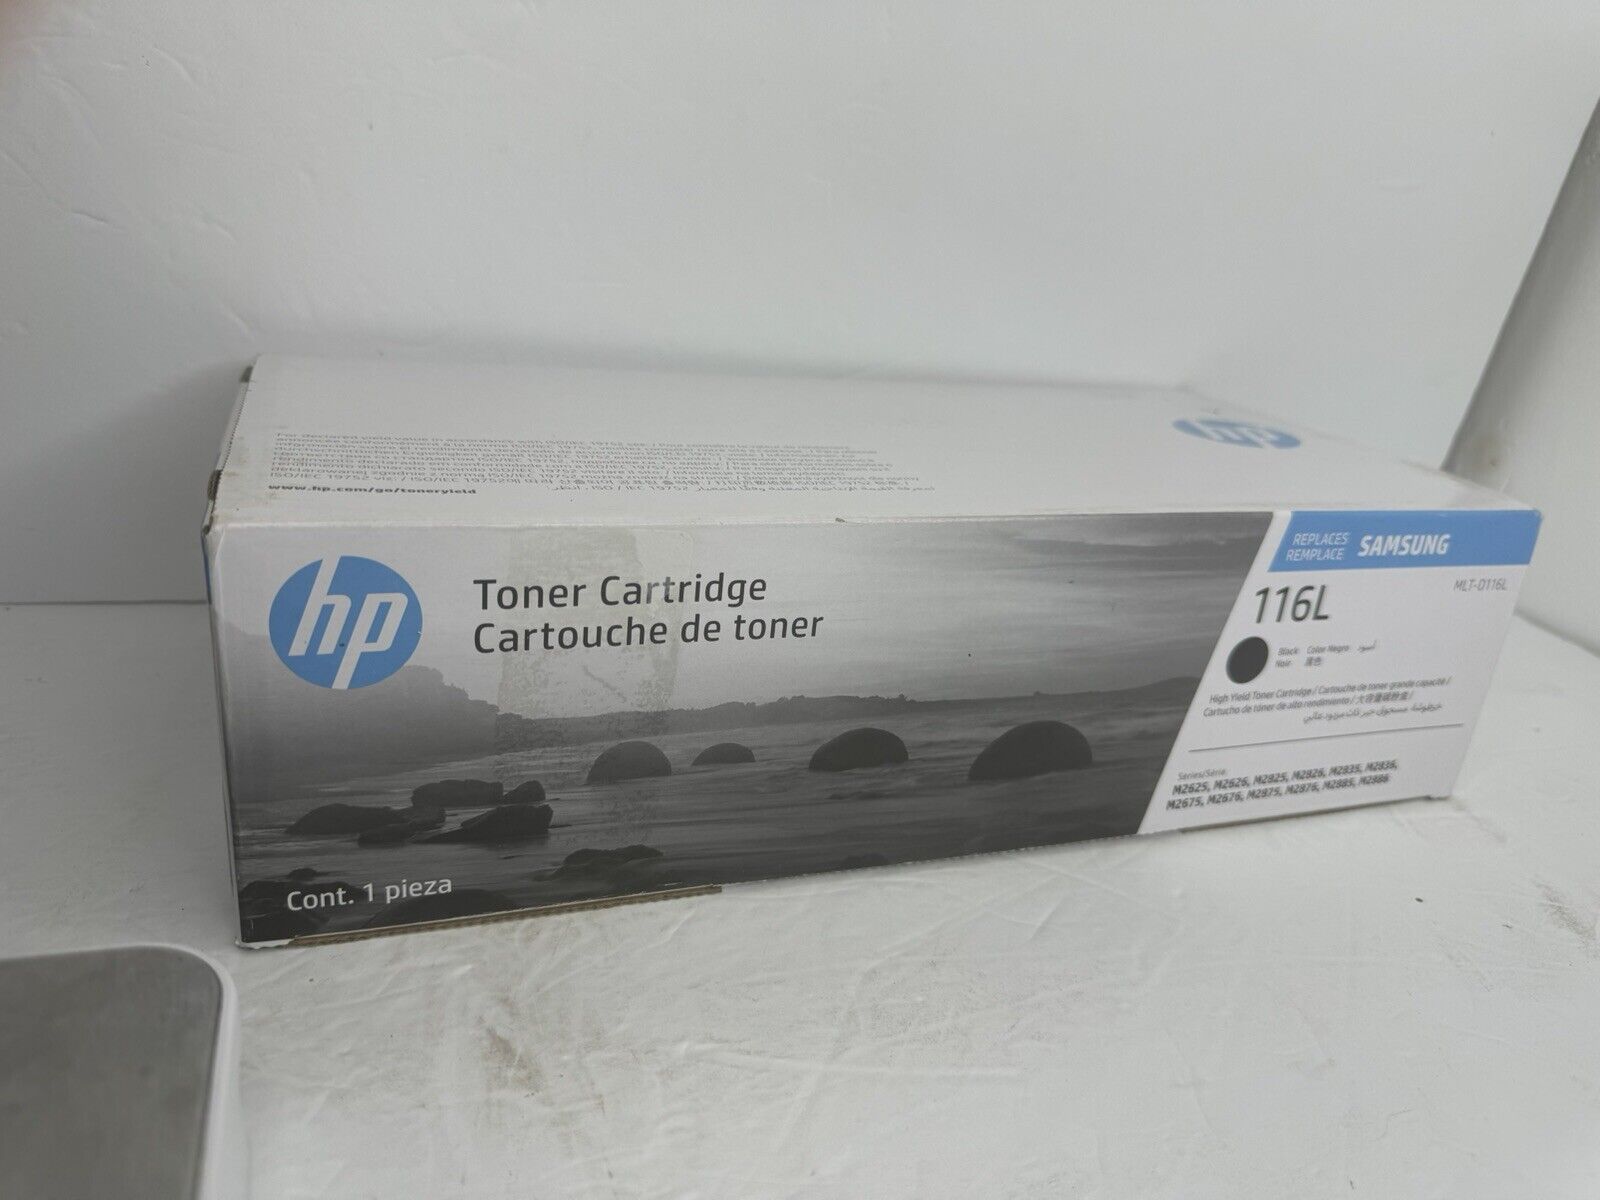 HP High Yield Black Toner Cartridge For Samsung MLT-D116L